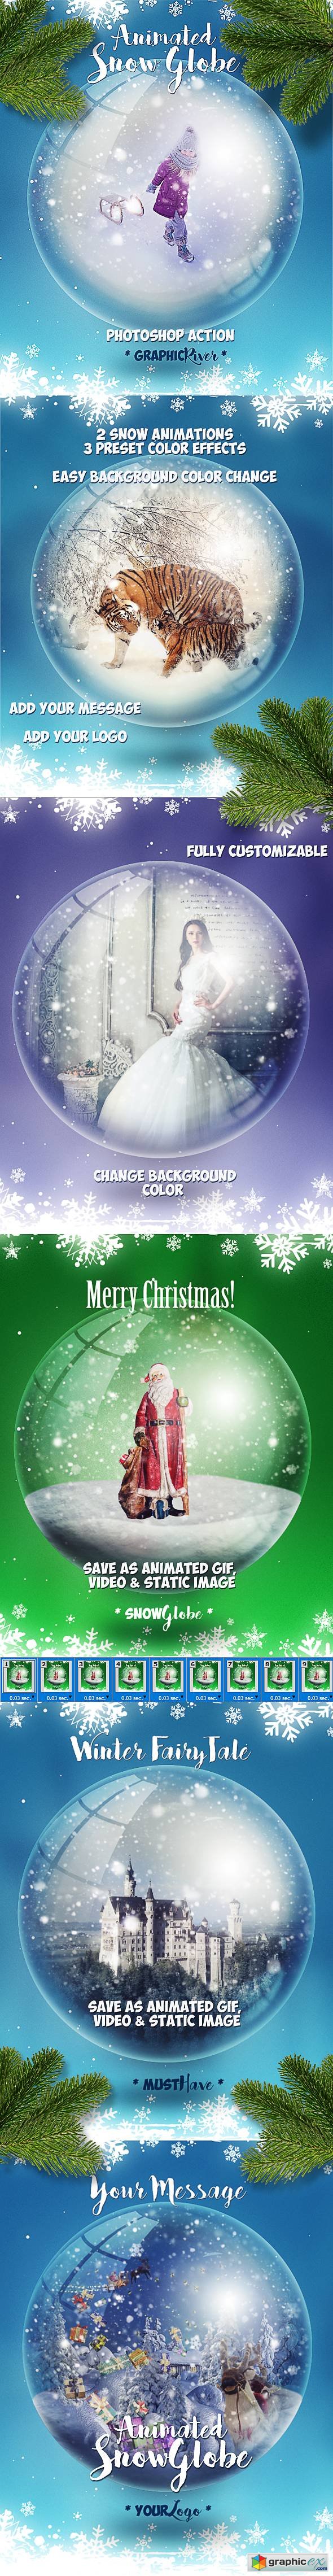 Animated Snow Globe Photoshop Action for Christmas